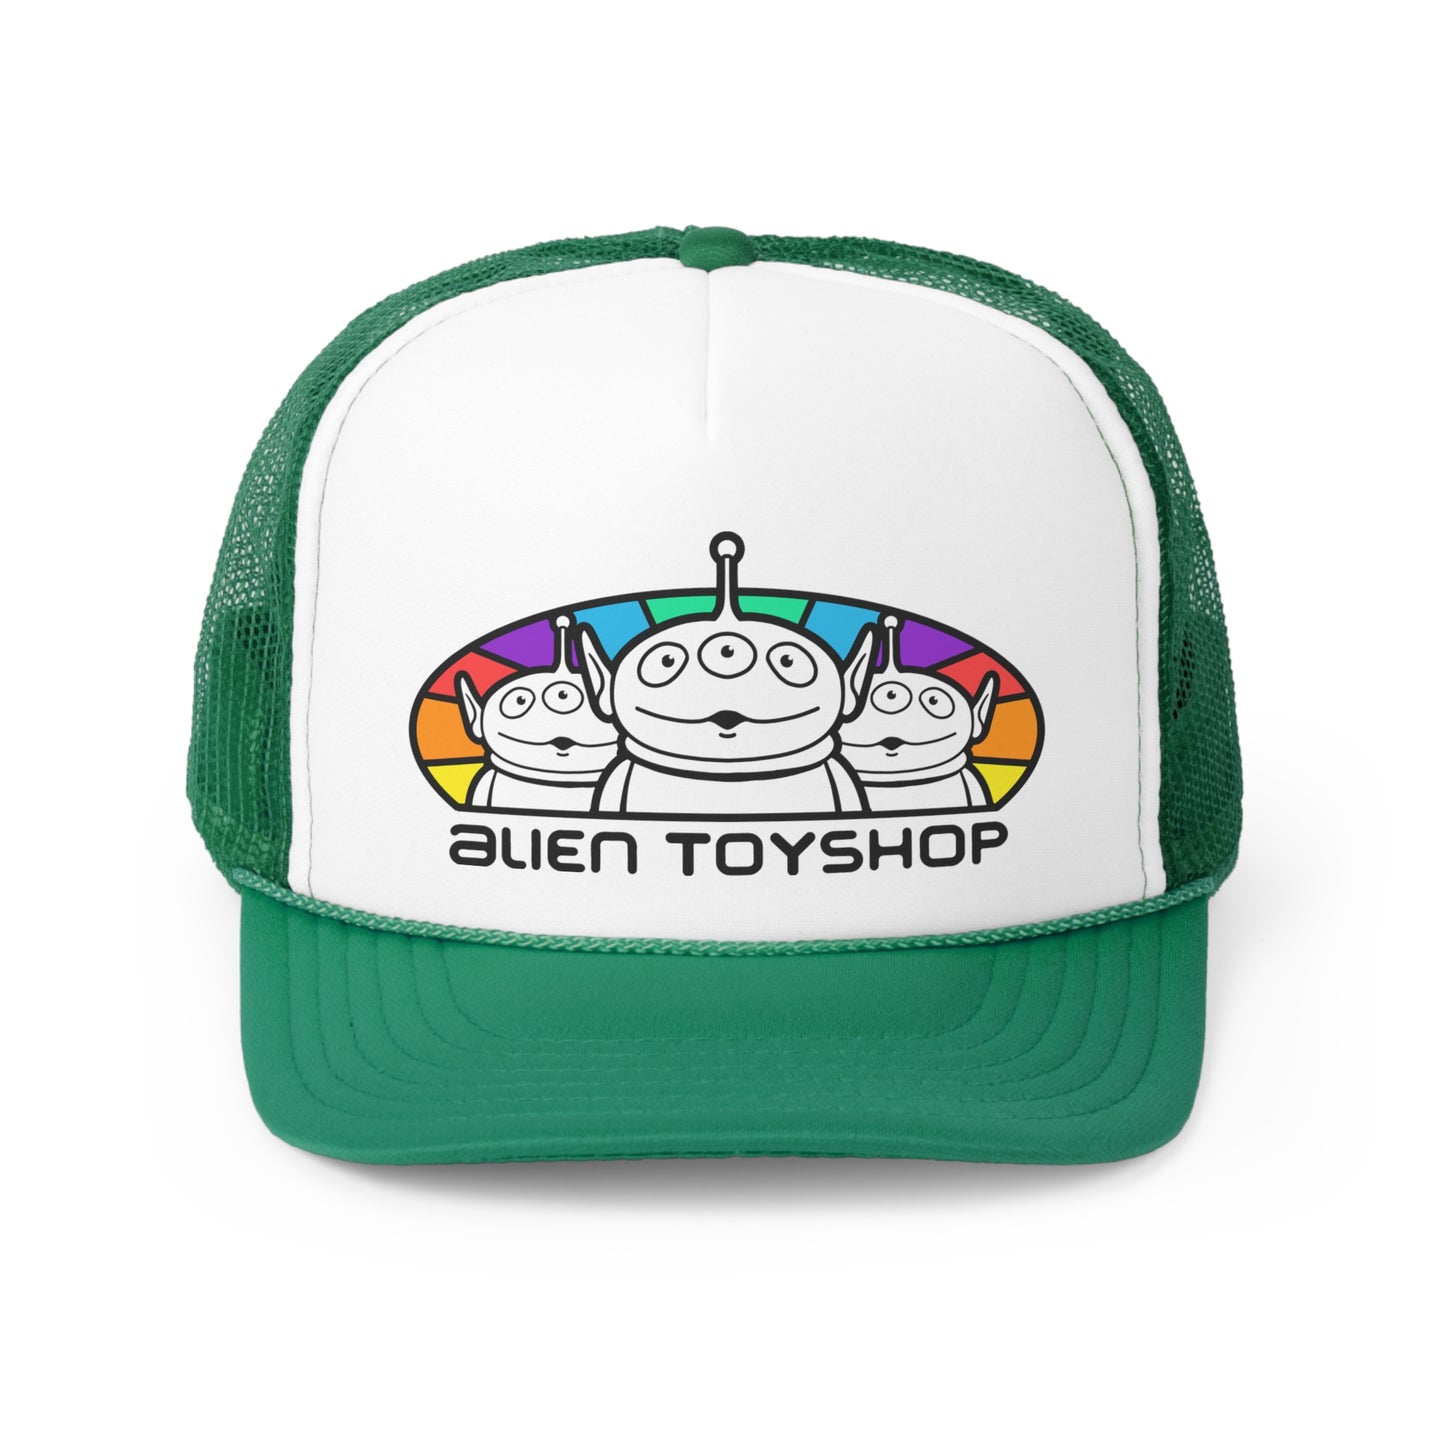 Alien Toyshop trucker hat